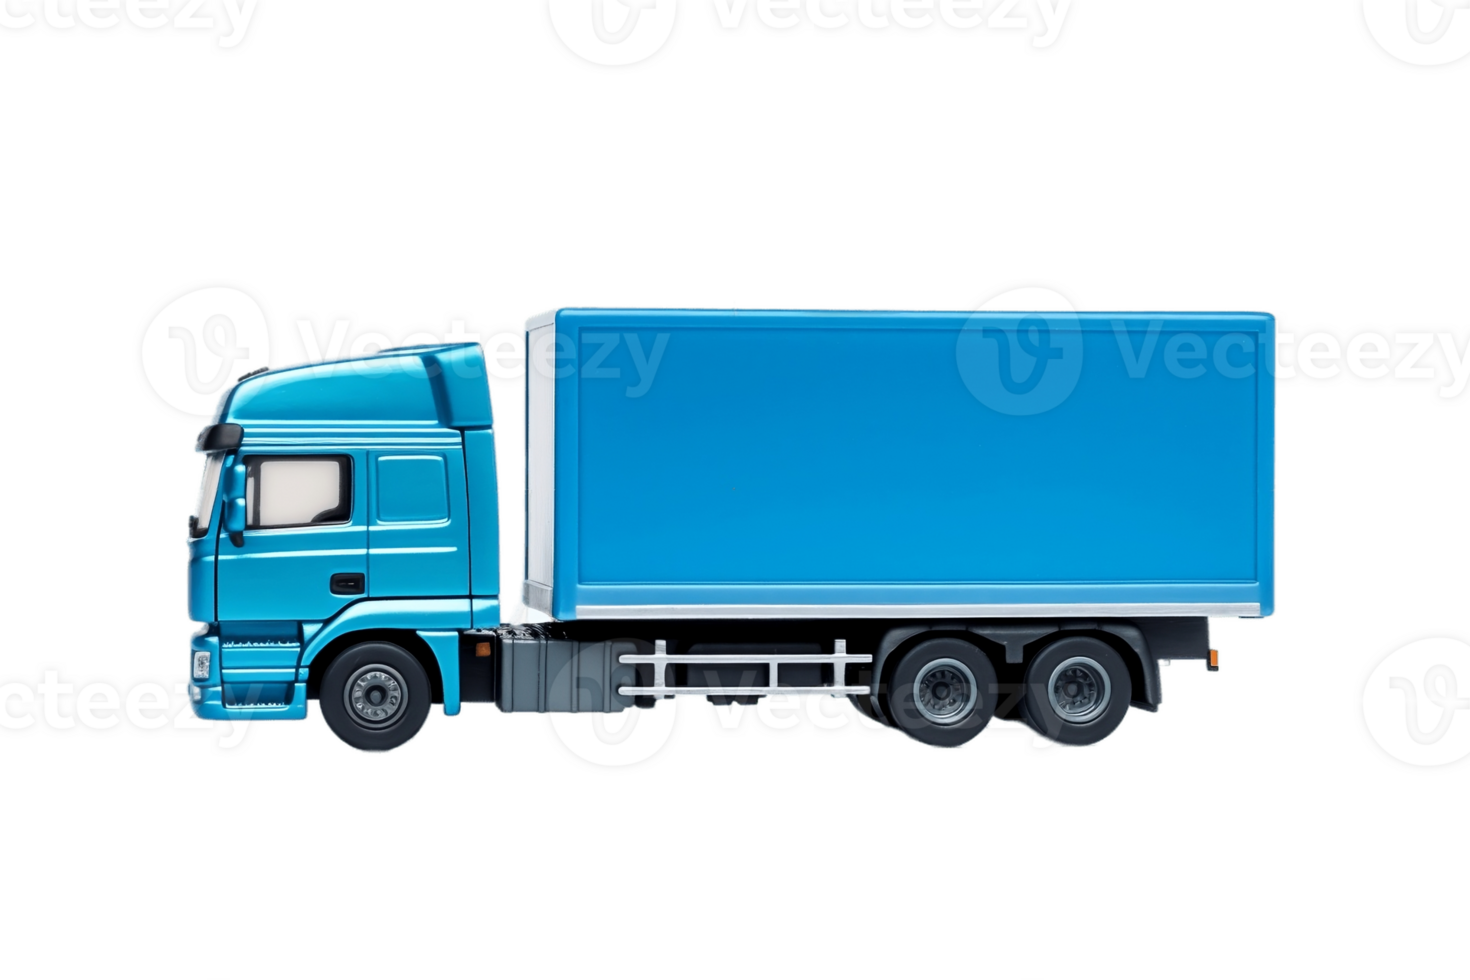 blu carico camion su trasparente sfondo. ai png